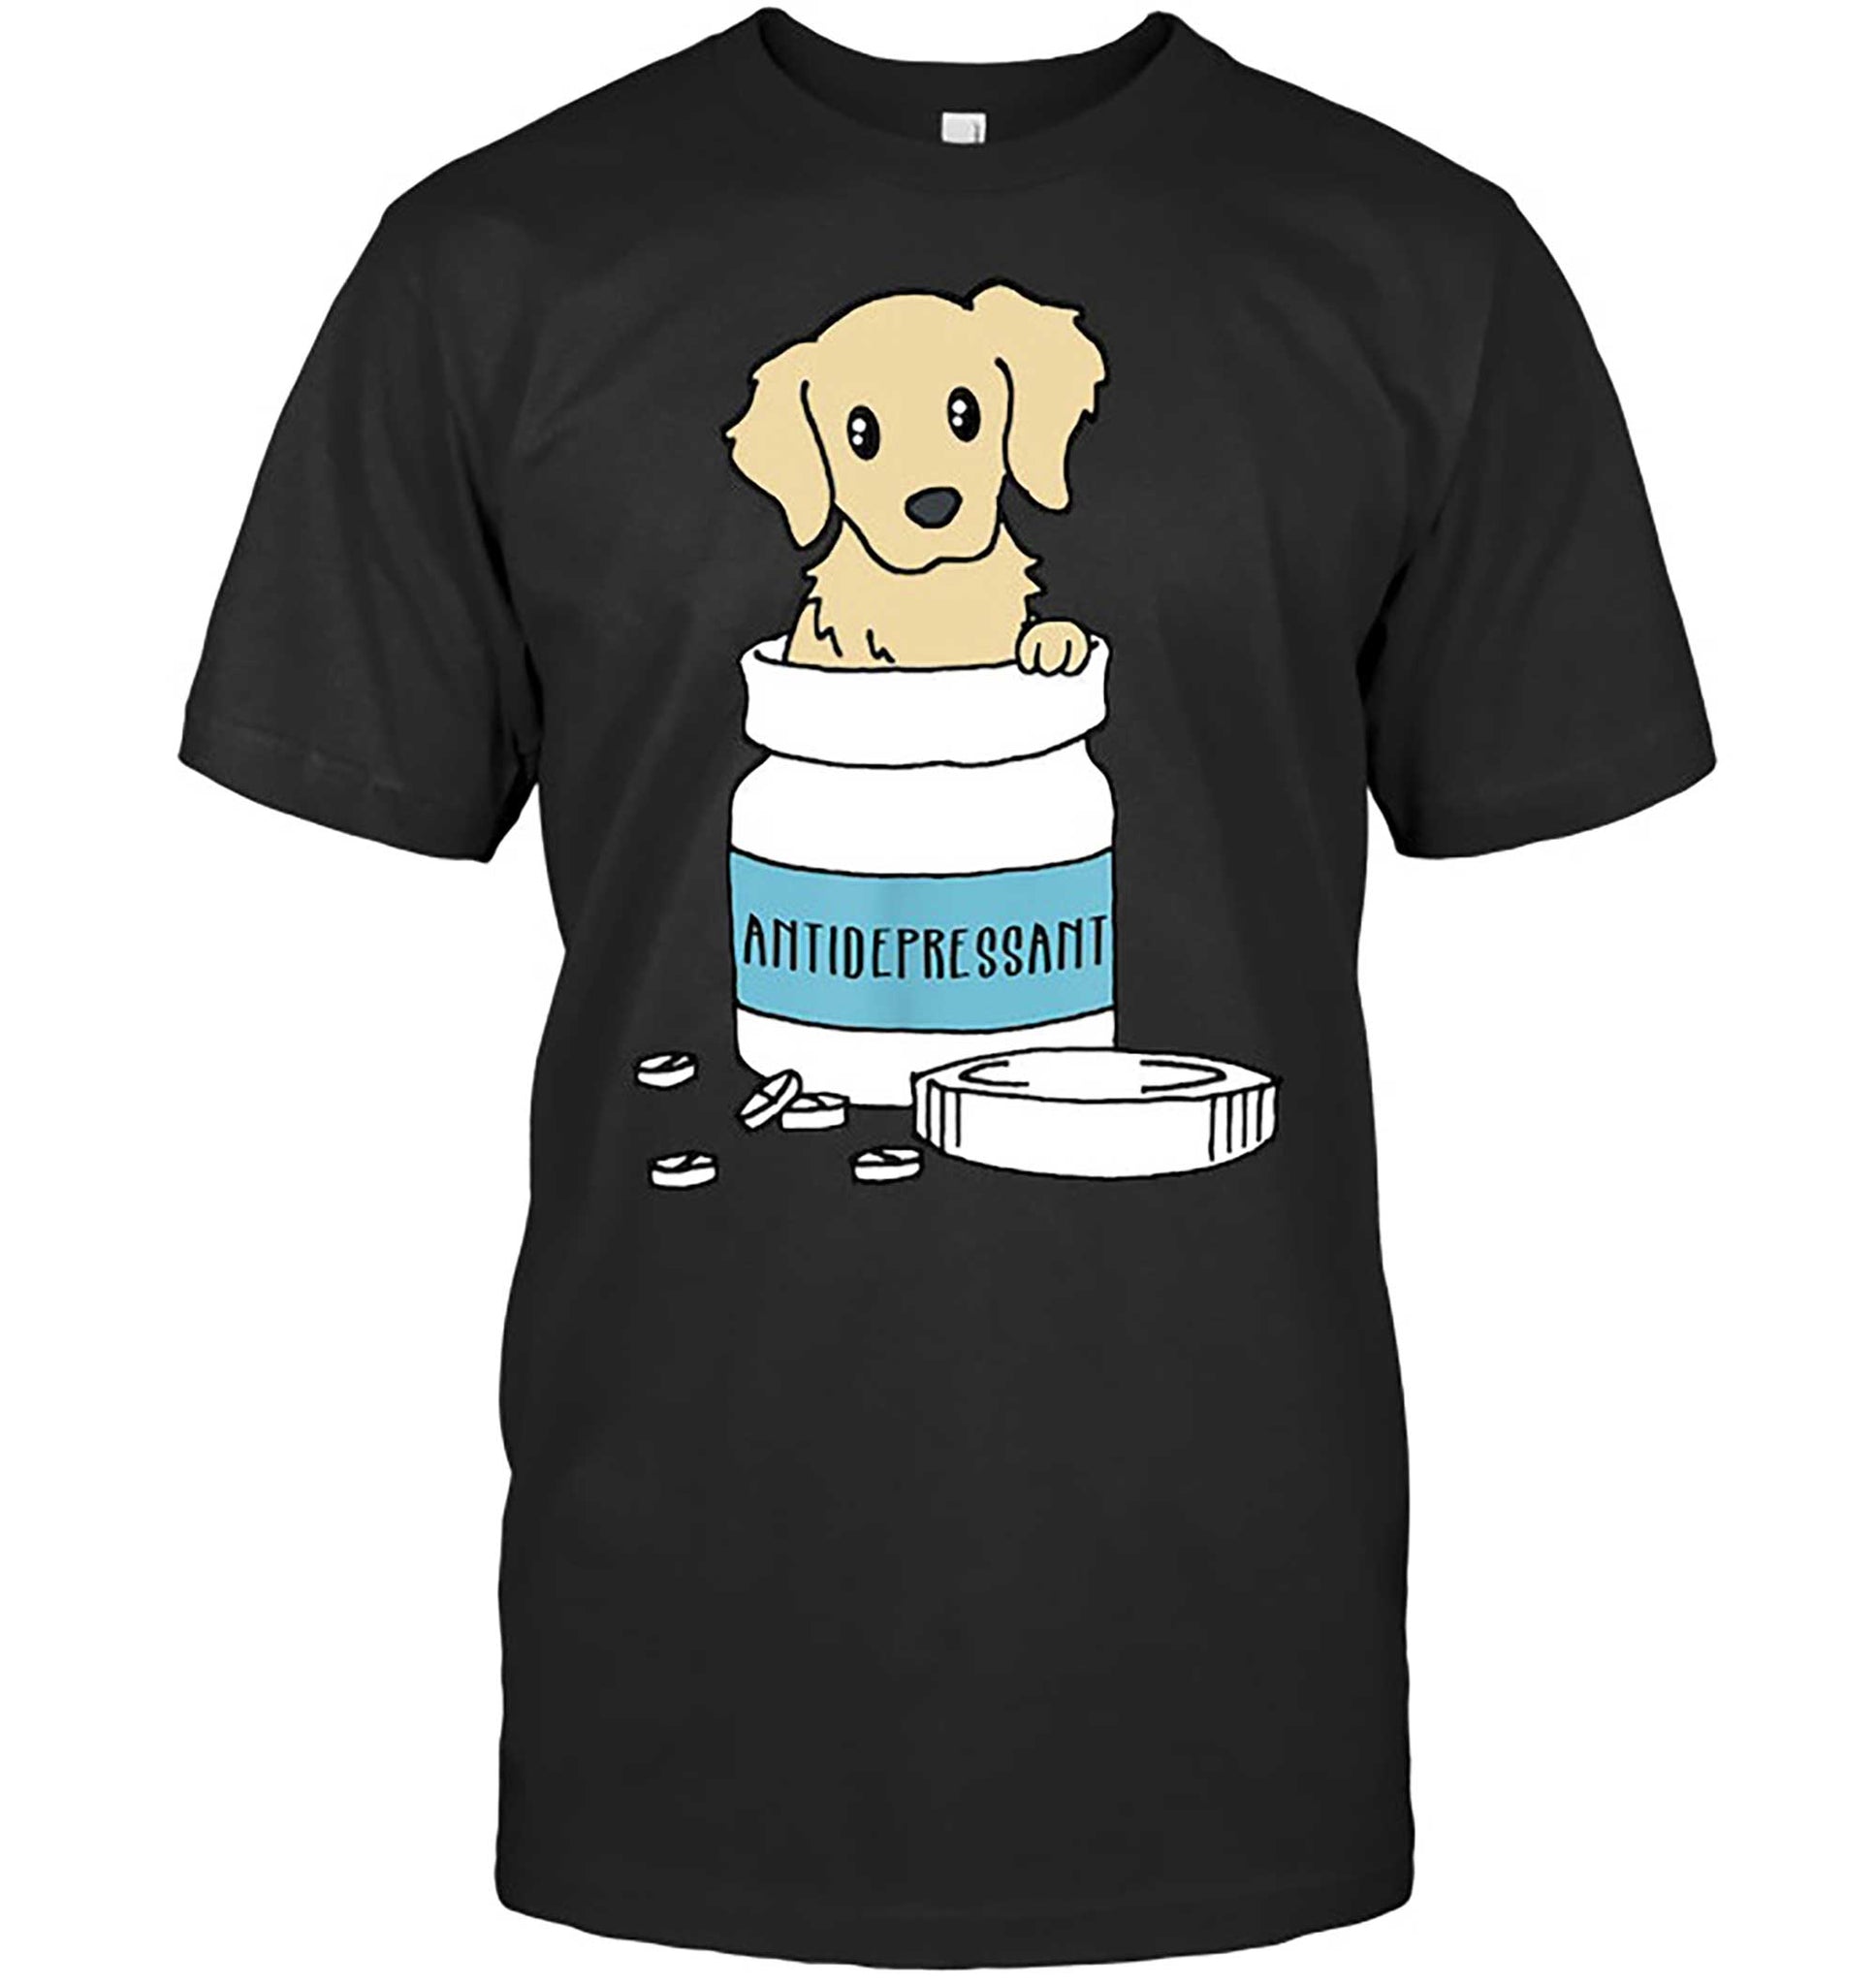 Skitongift-Dog-Antidepressant-Tshirt-Funny-Golden-Retriever-Dog-Shirt-Funny-Shirts-Hoodie-Sweater-Short-Sleeve-Casual-Shirt